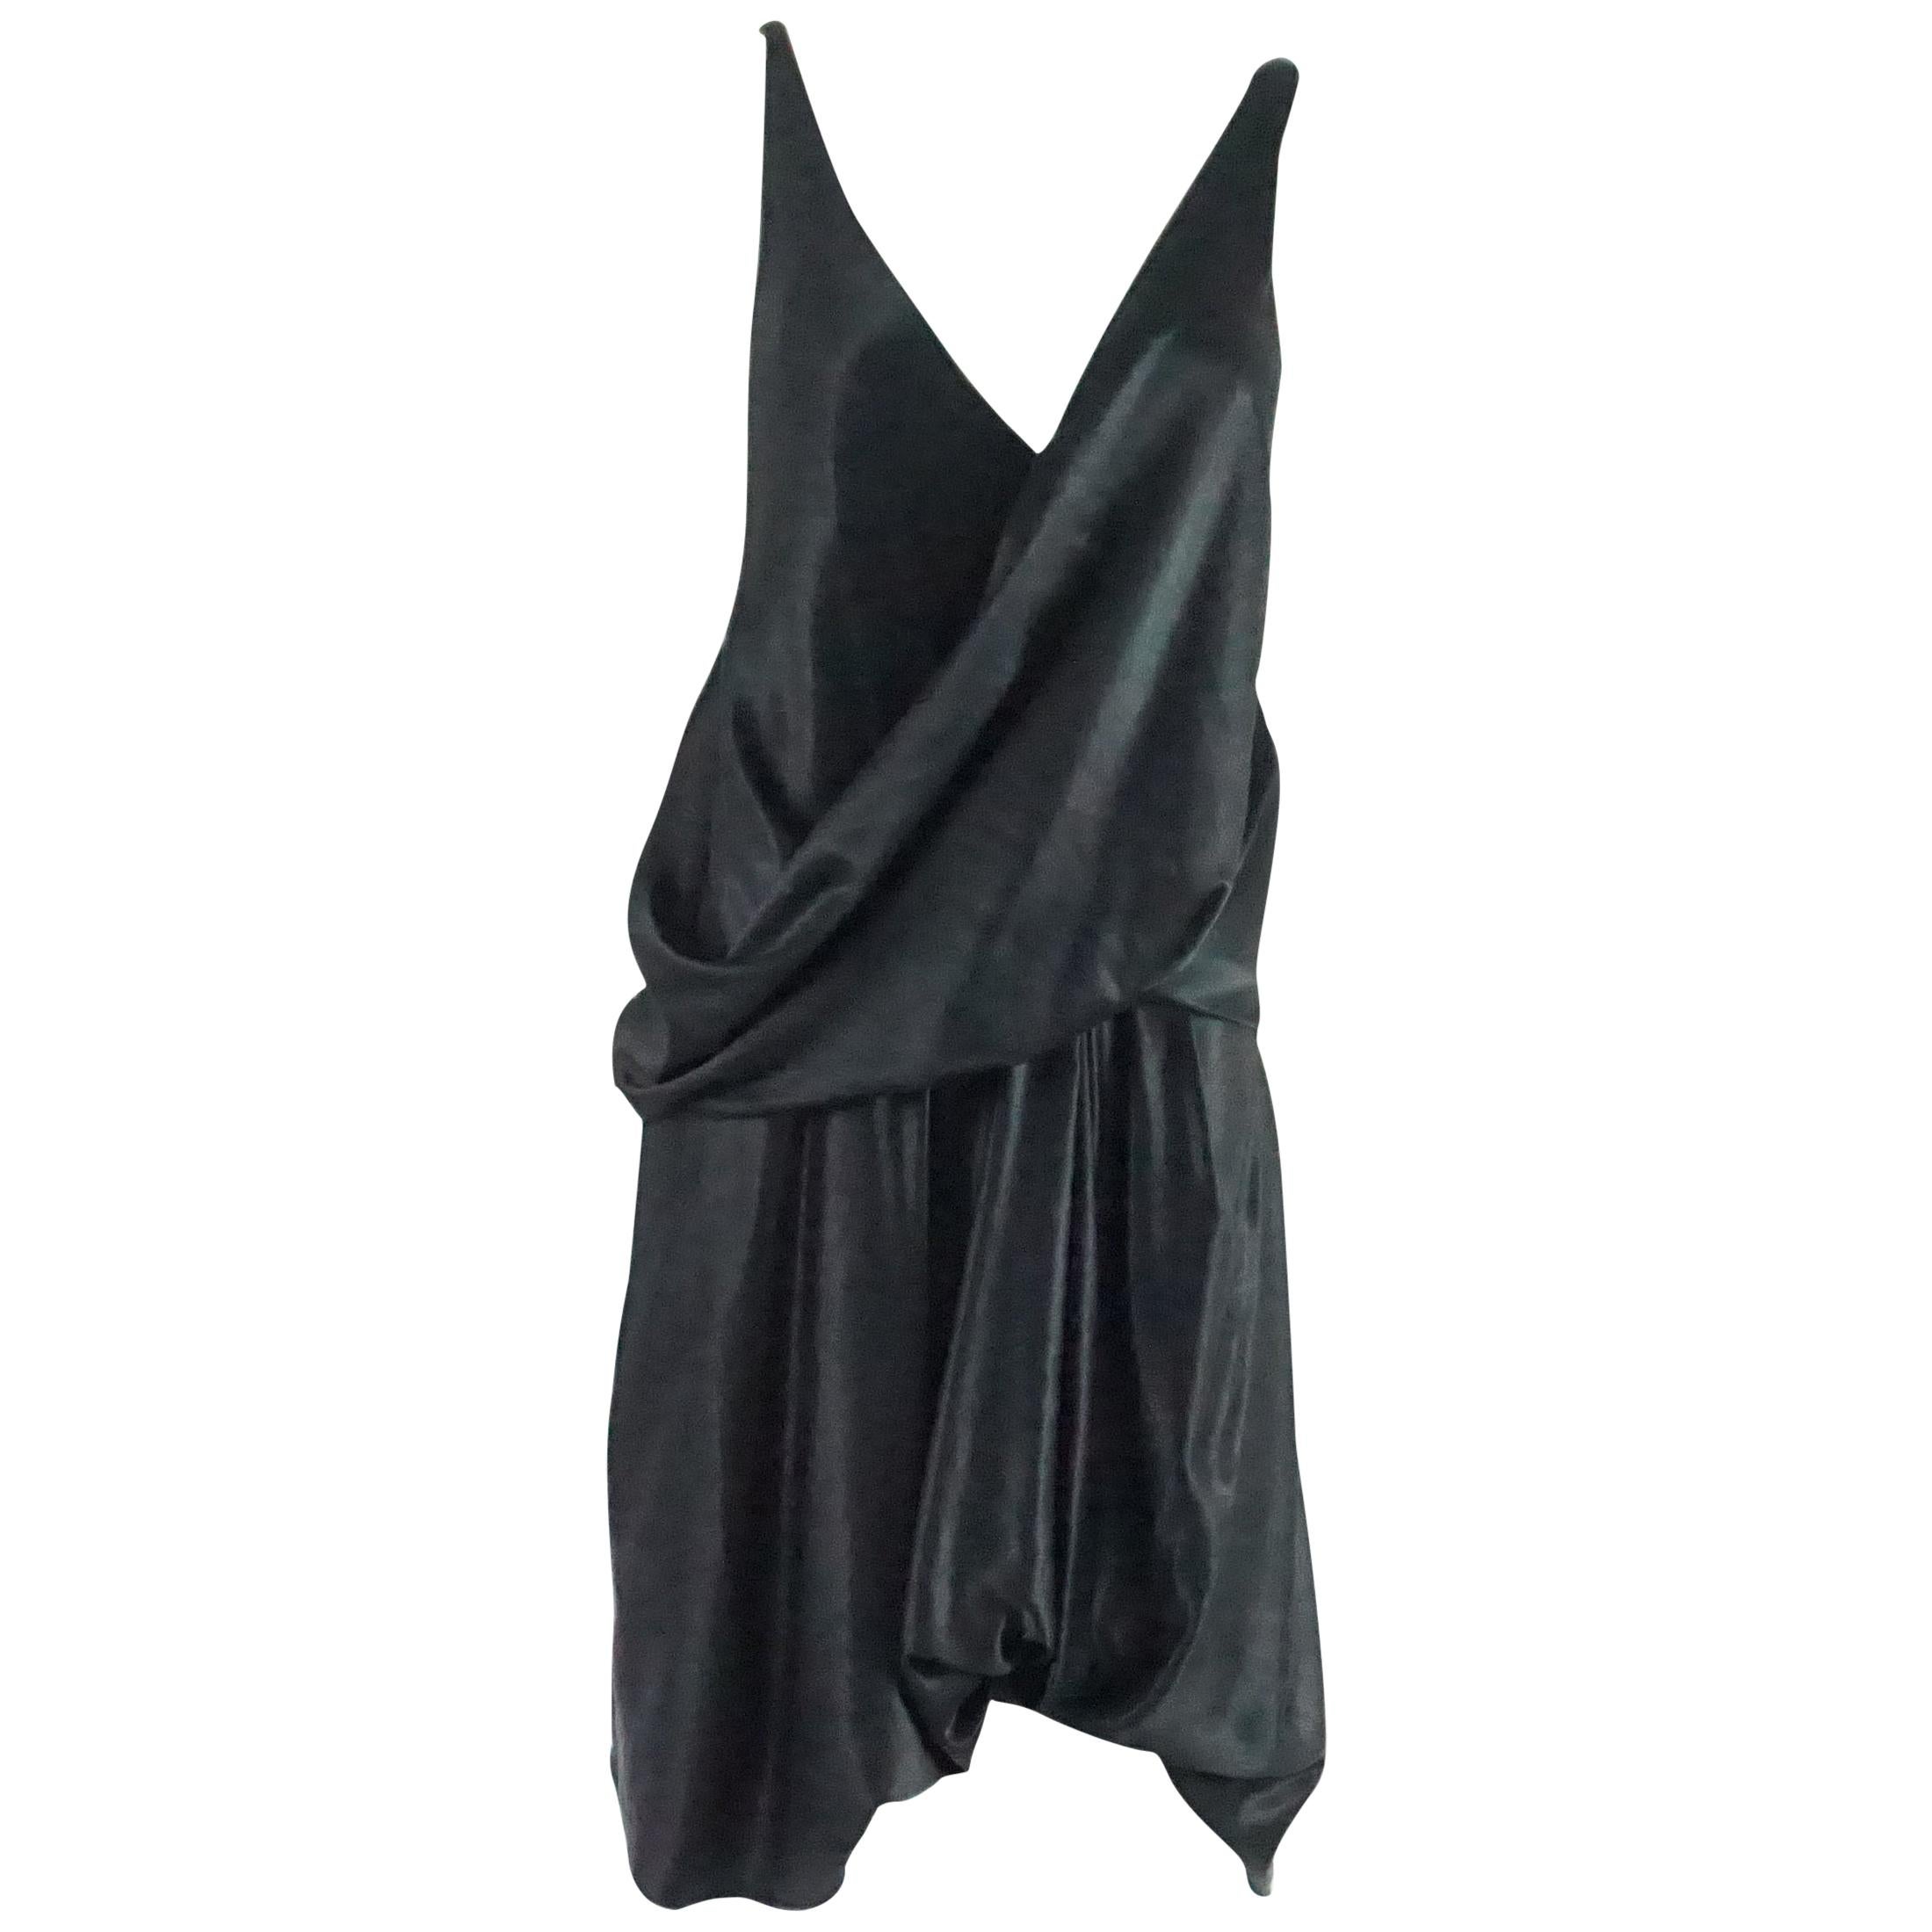 Helmut Lang Black Satin Dress with Crossing Straps - 6